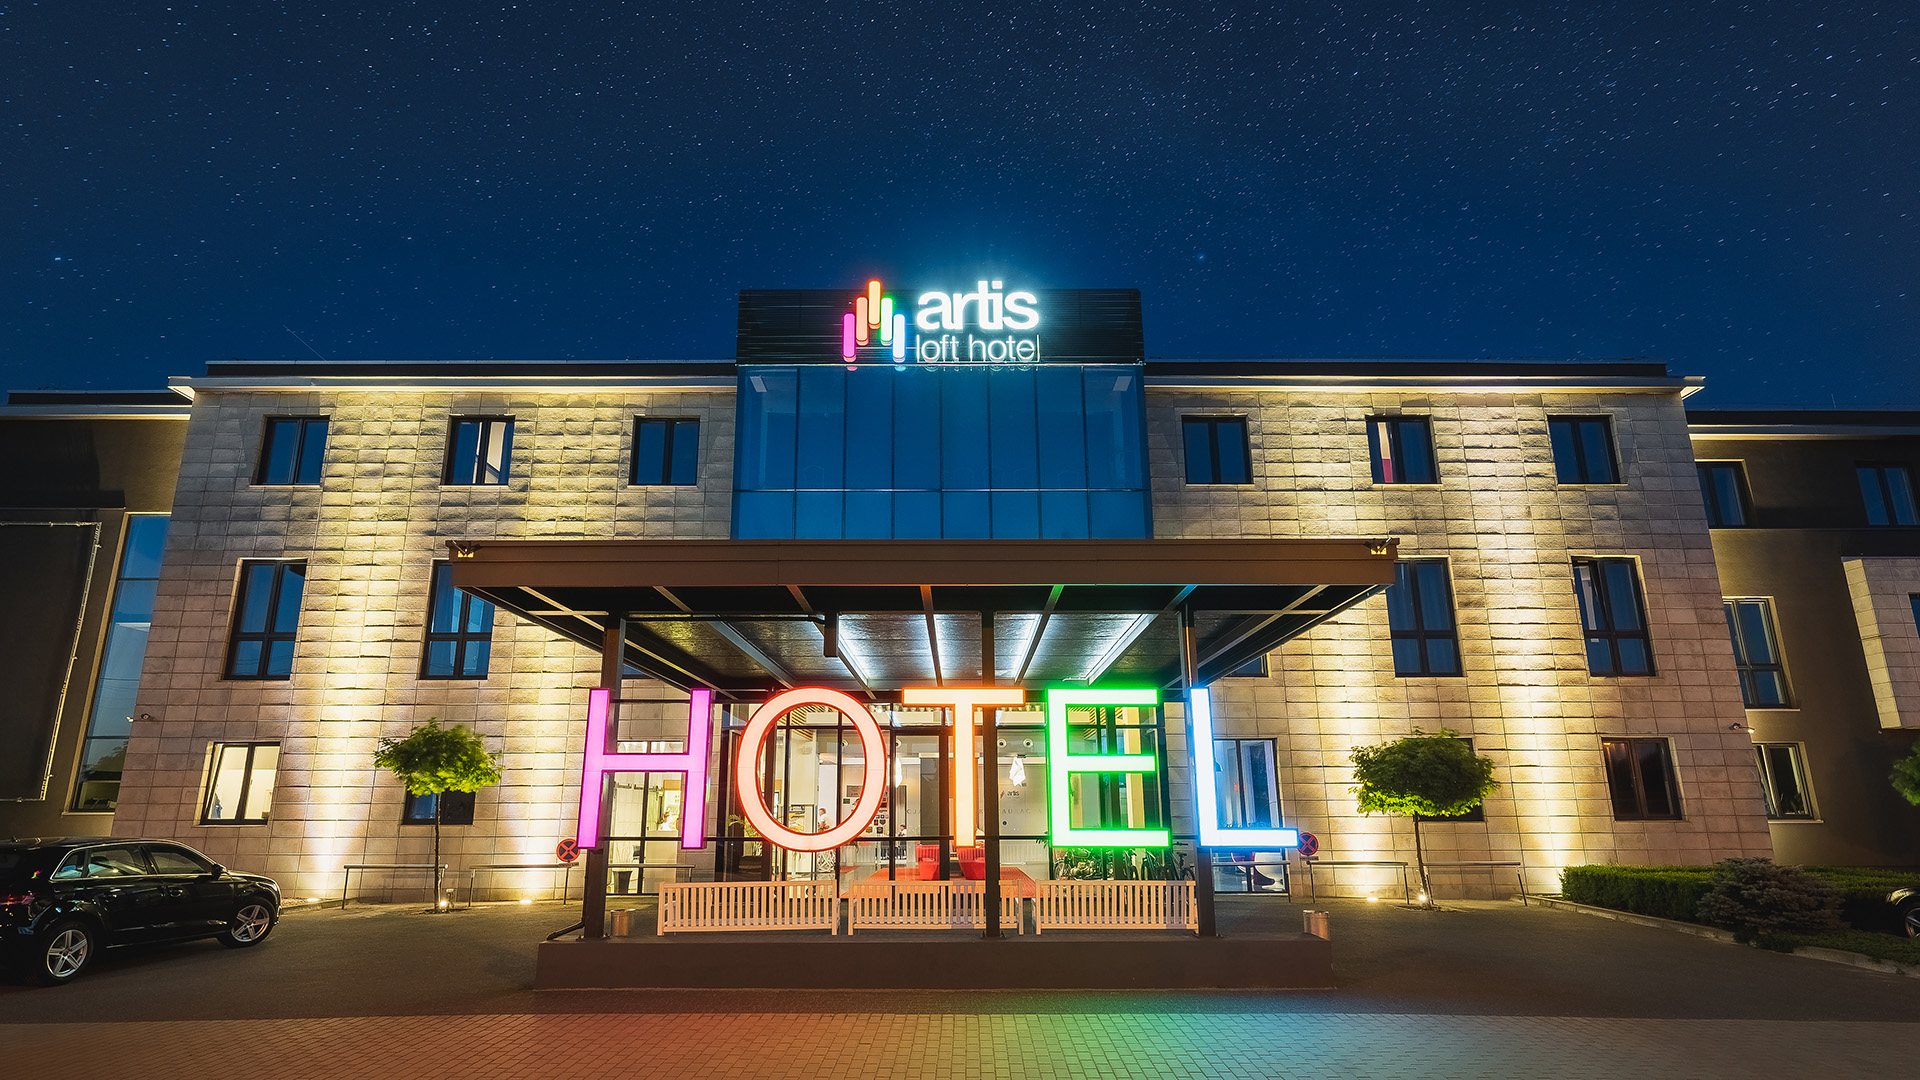 artis-hotel-front